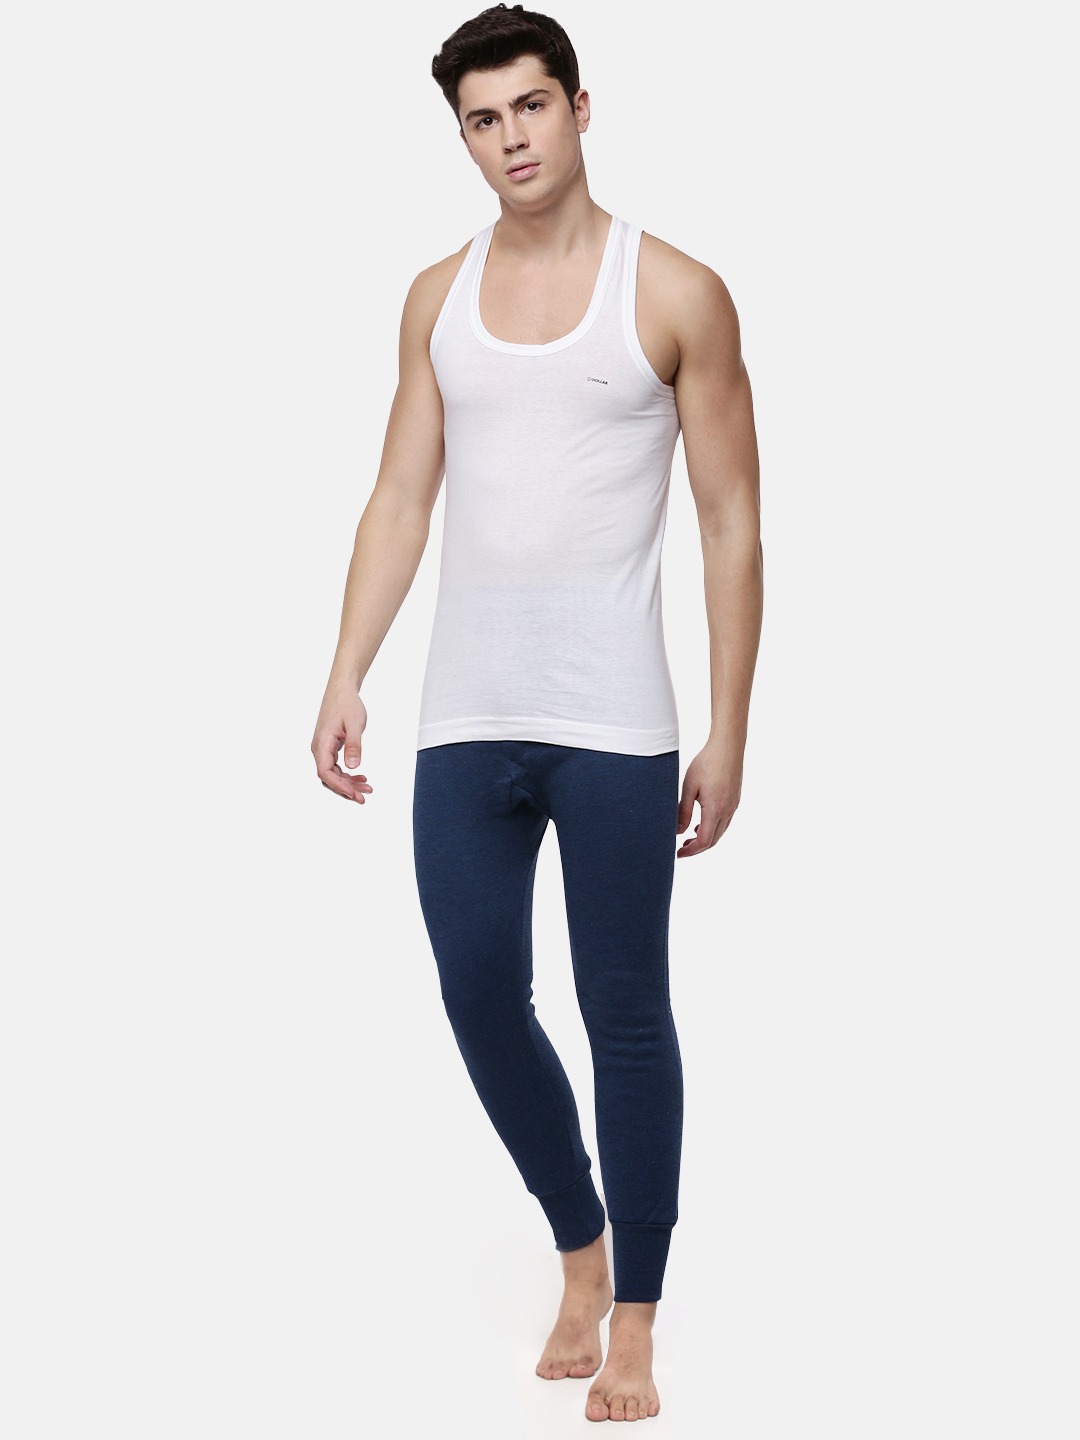 Clothing Innerwear Vests | Dollar Bigboss Pack of 5 White Innerwear Vests MDVE-01-PO5 - RM17304